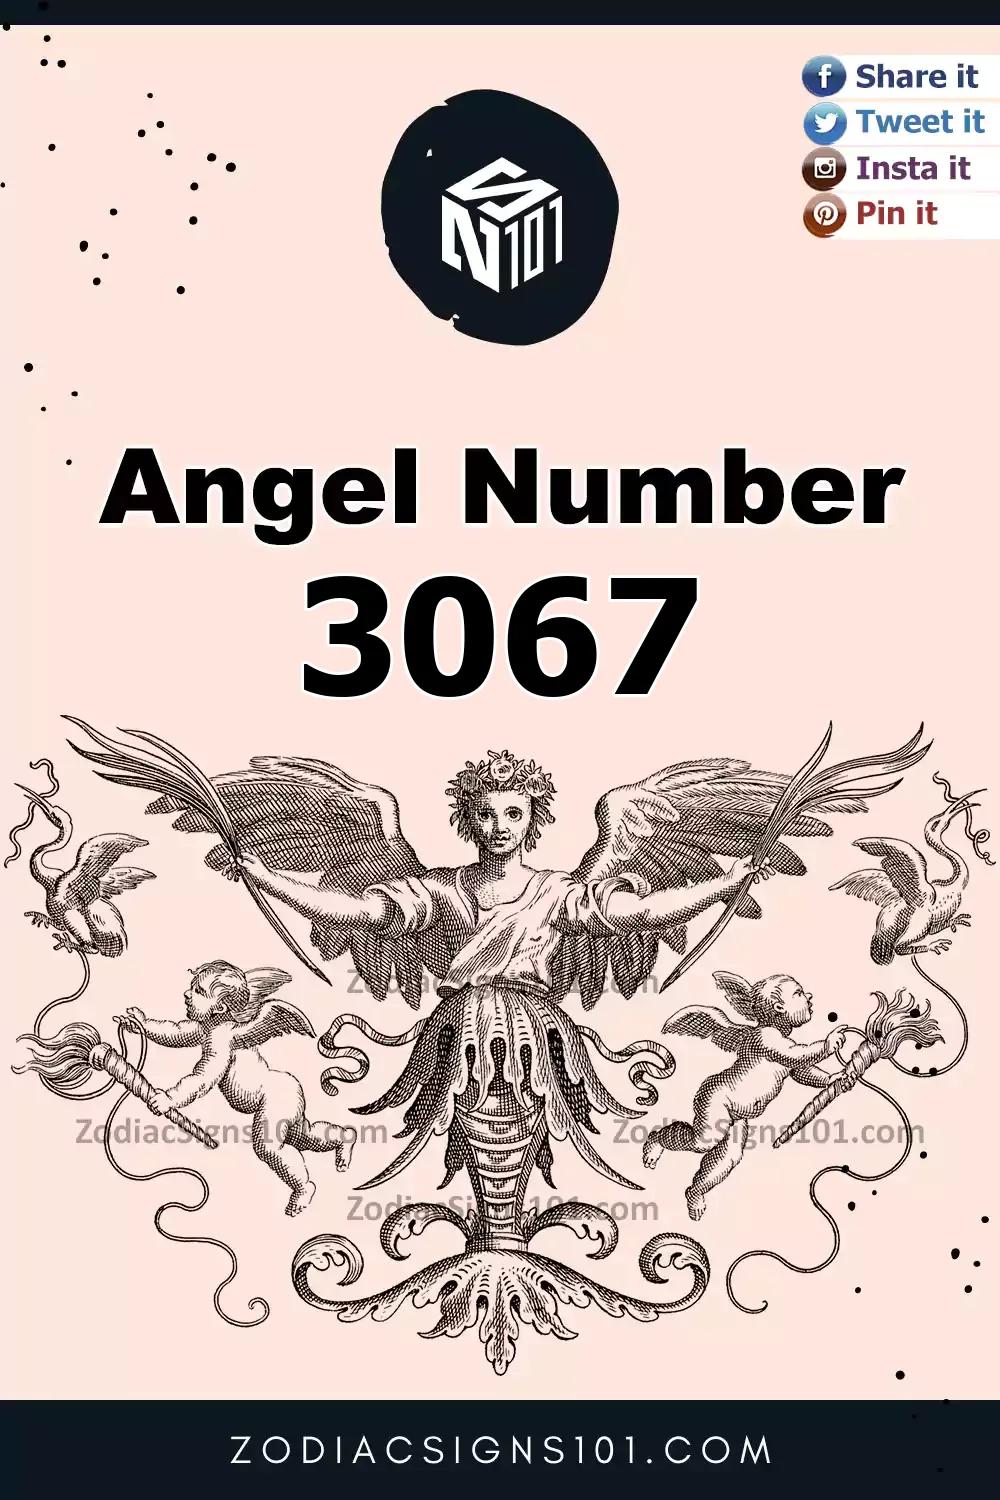 3067-Angel-Number-Meaning.jpg